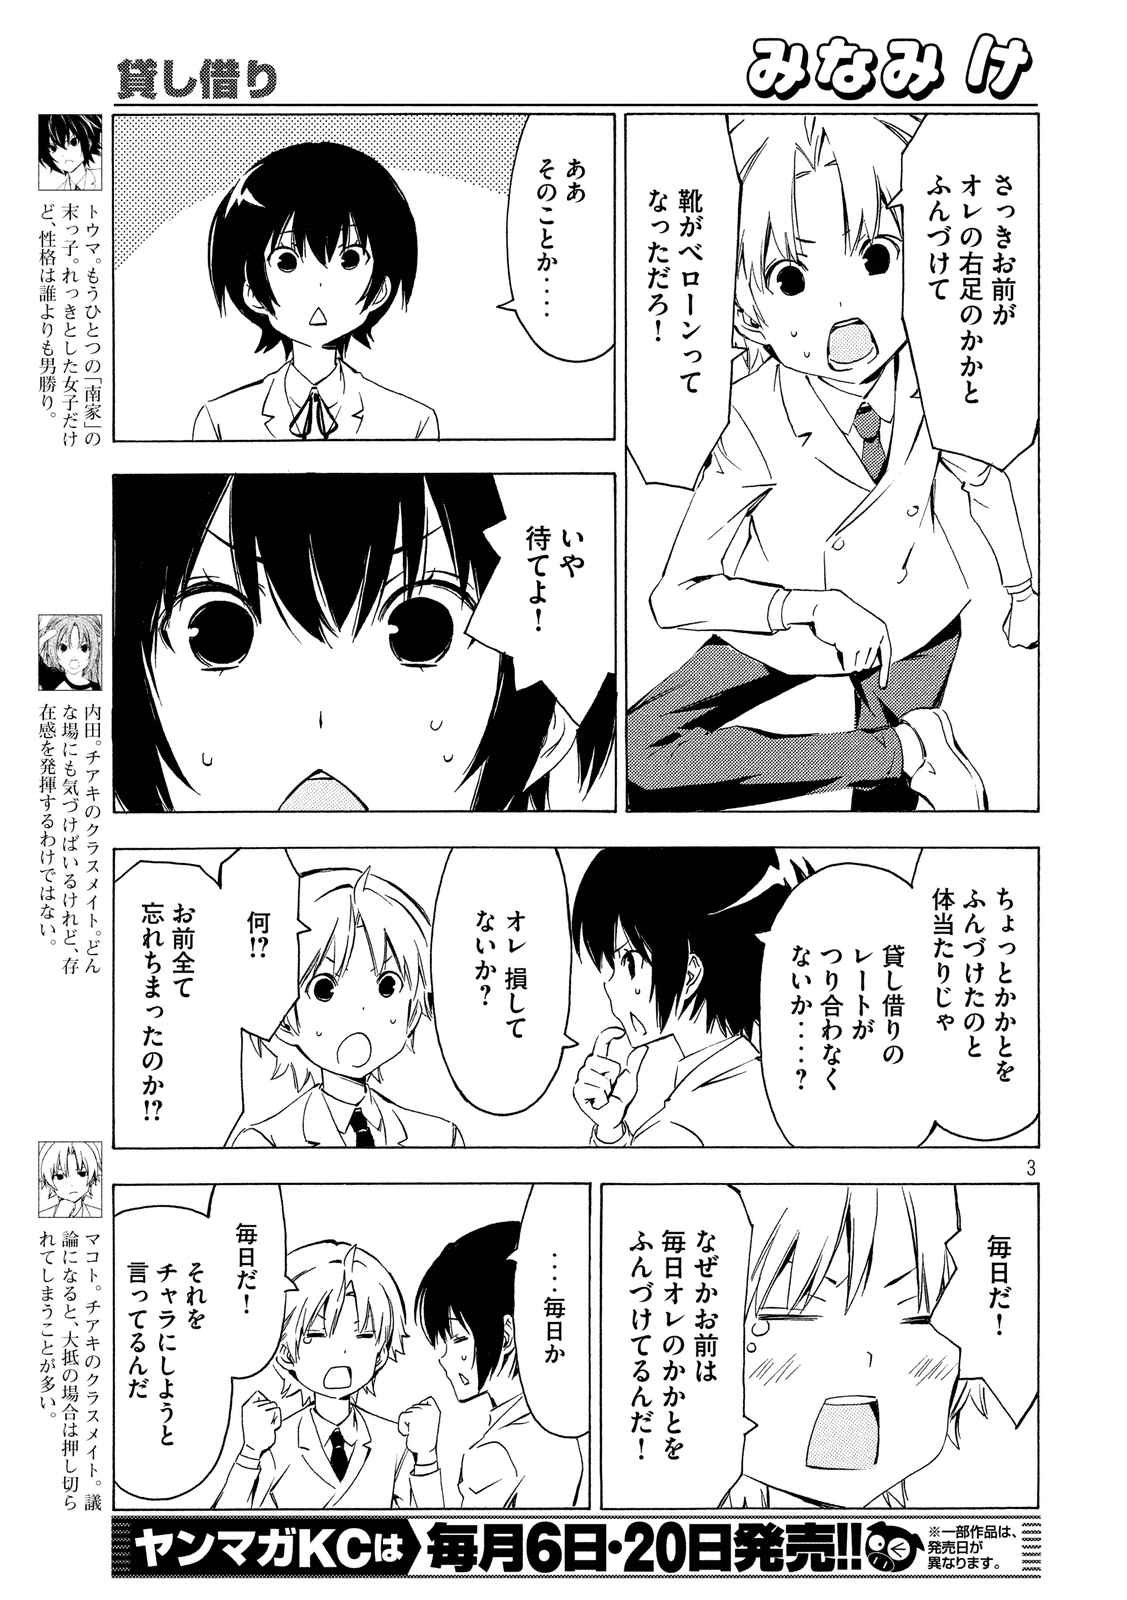 Minami-ke - Chapter 310 - Page 3